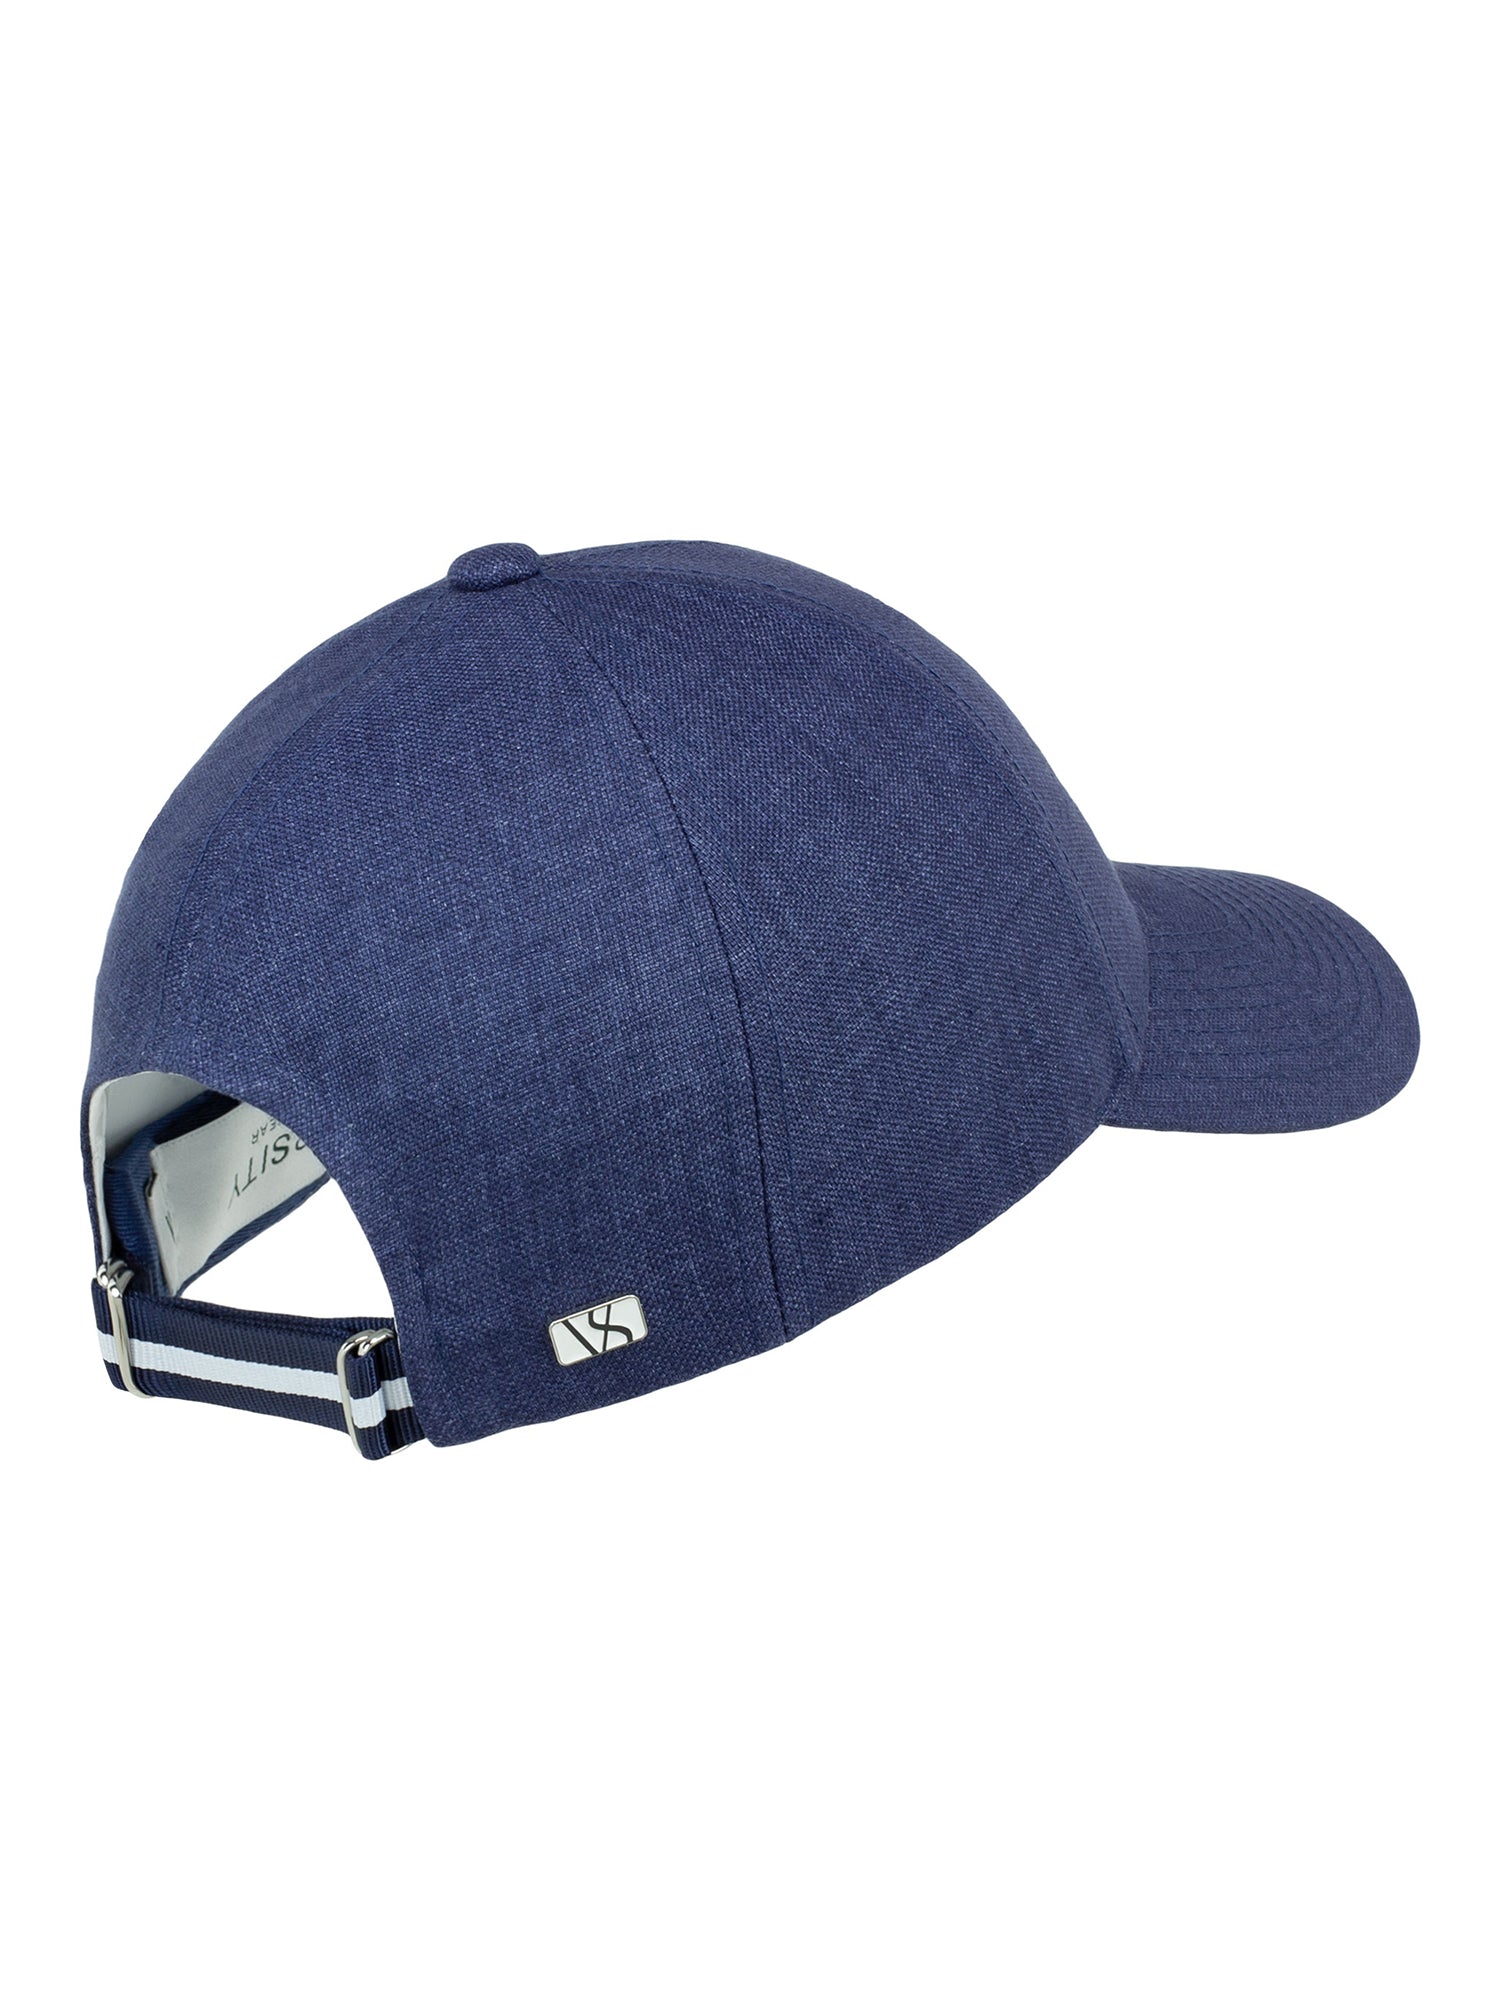 Oxford Blue Linen Cap